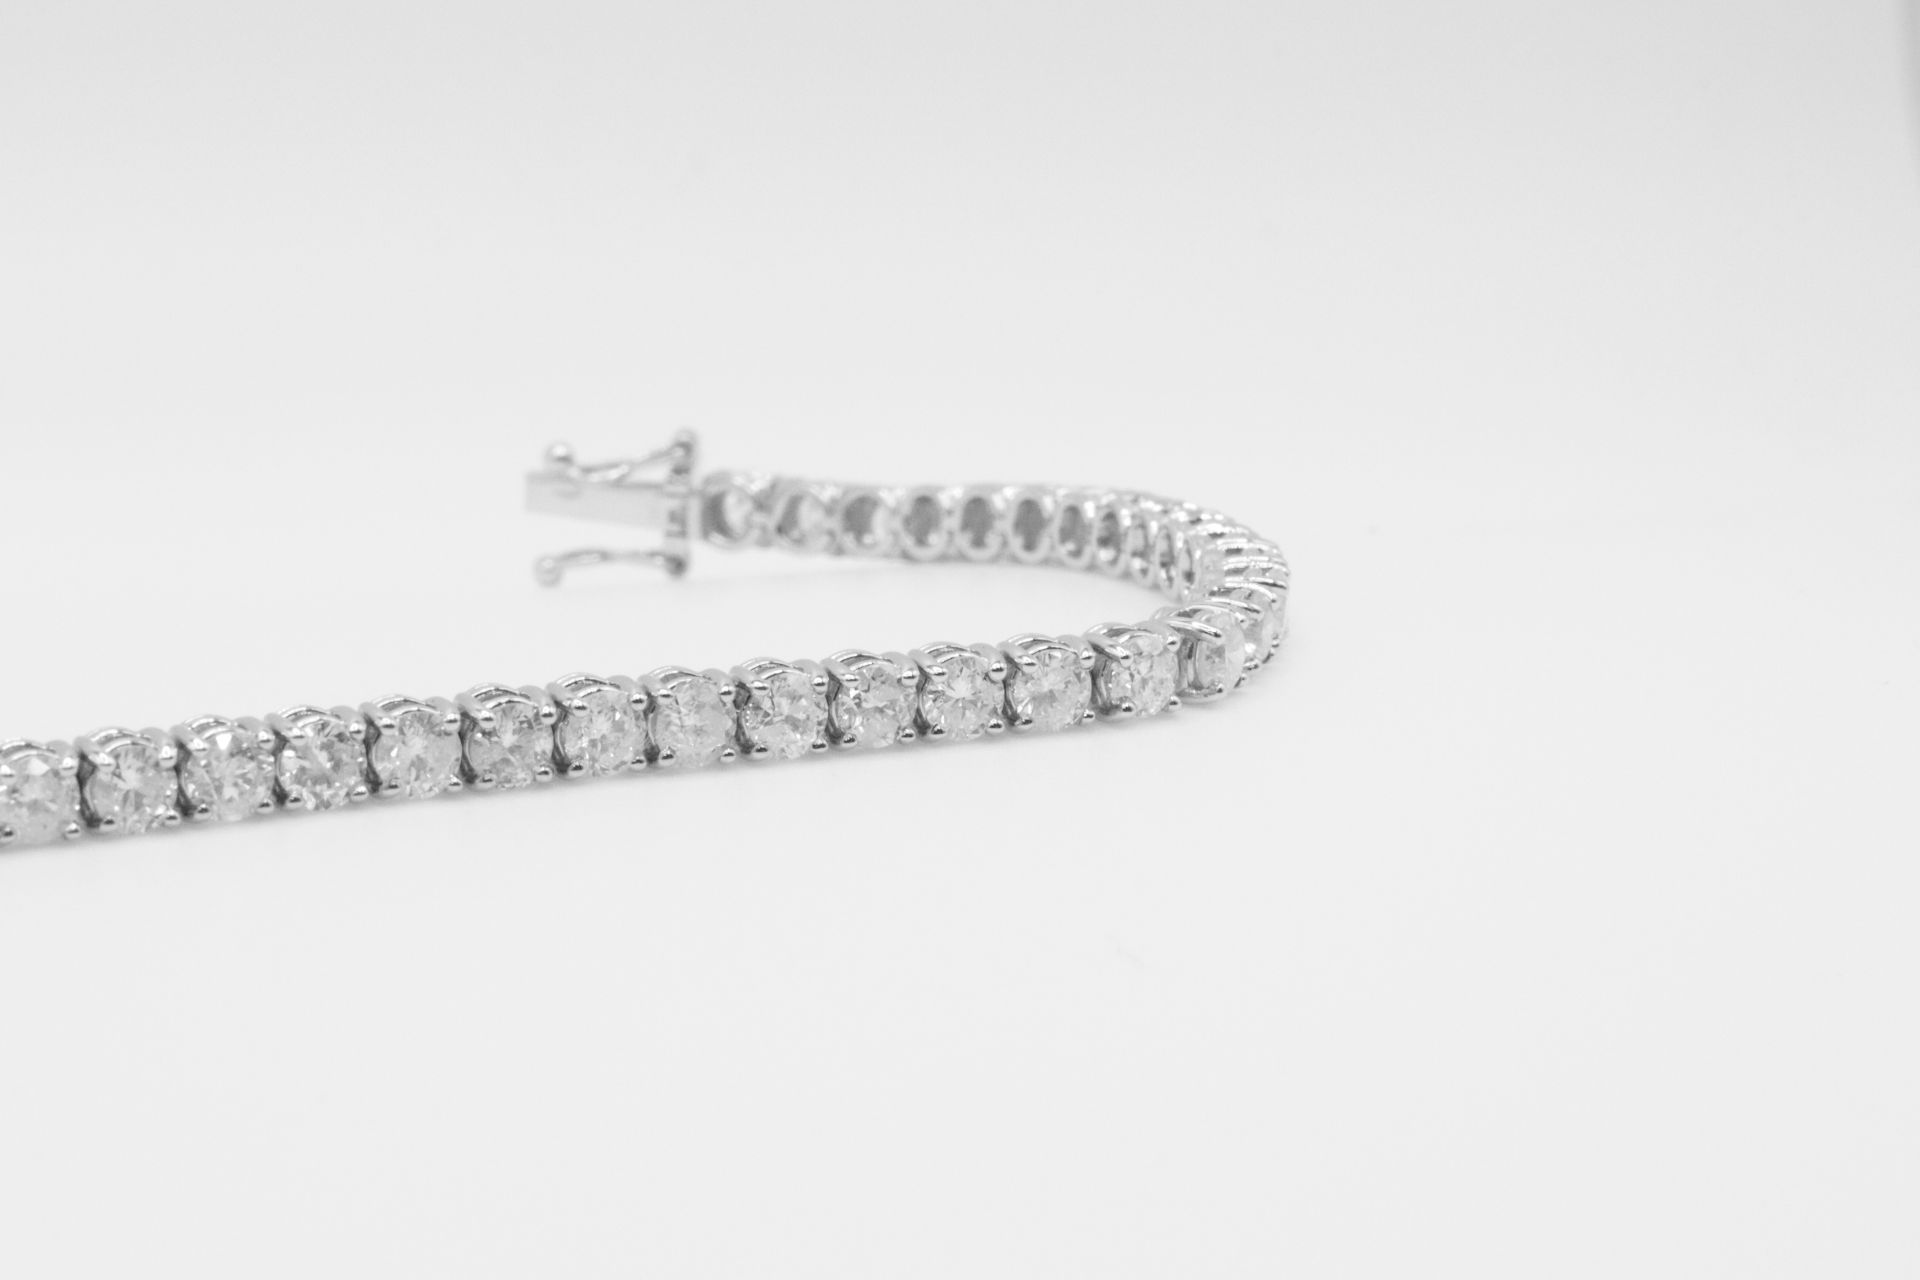 9.0 Carat 18ct White Gold Tennis Bracelet set with Round Brilliant Cut Natural Diamonds - Image 16 of 17